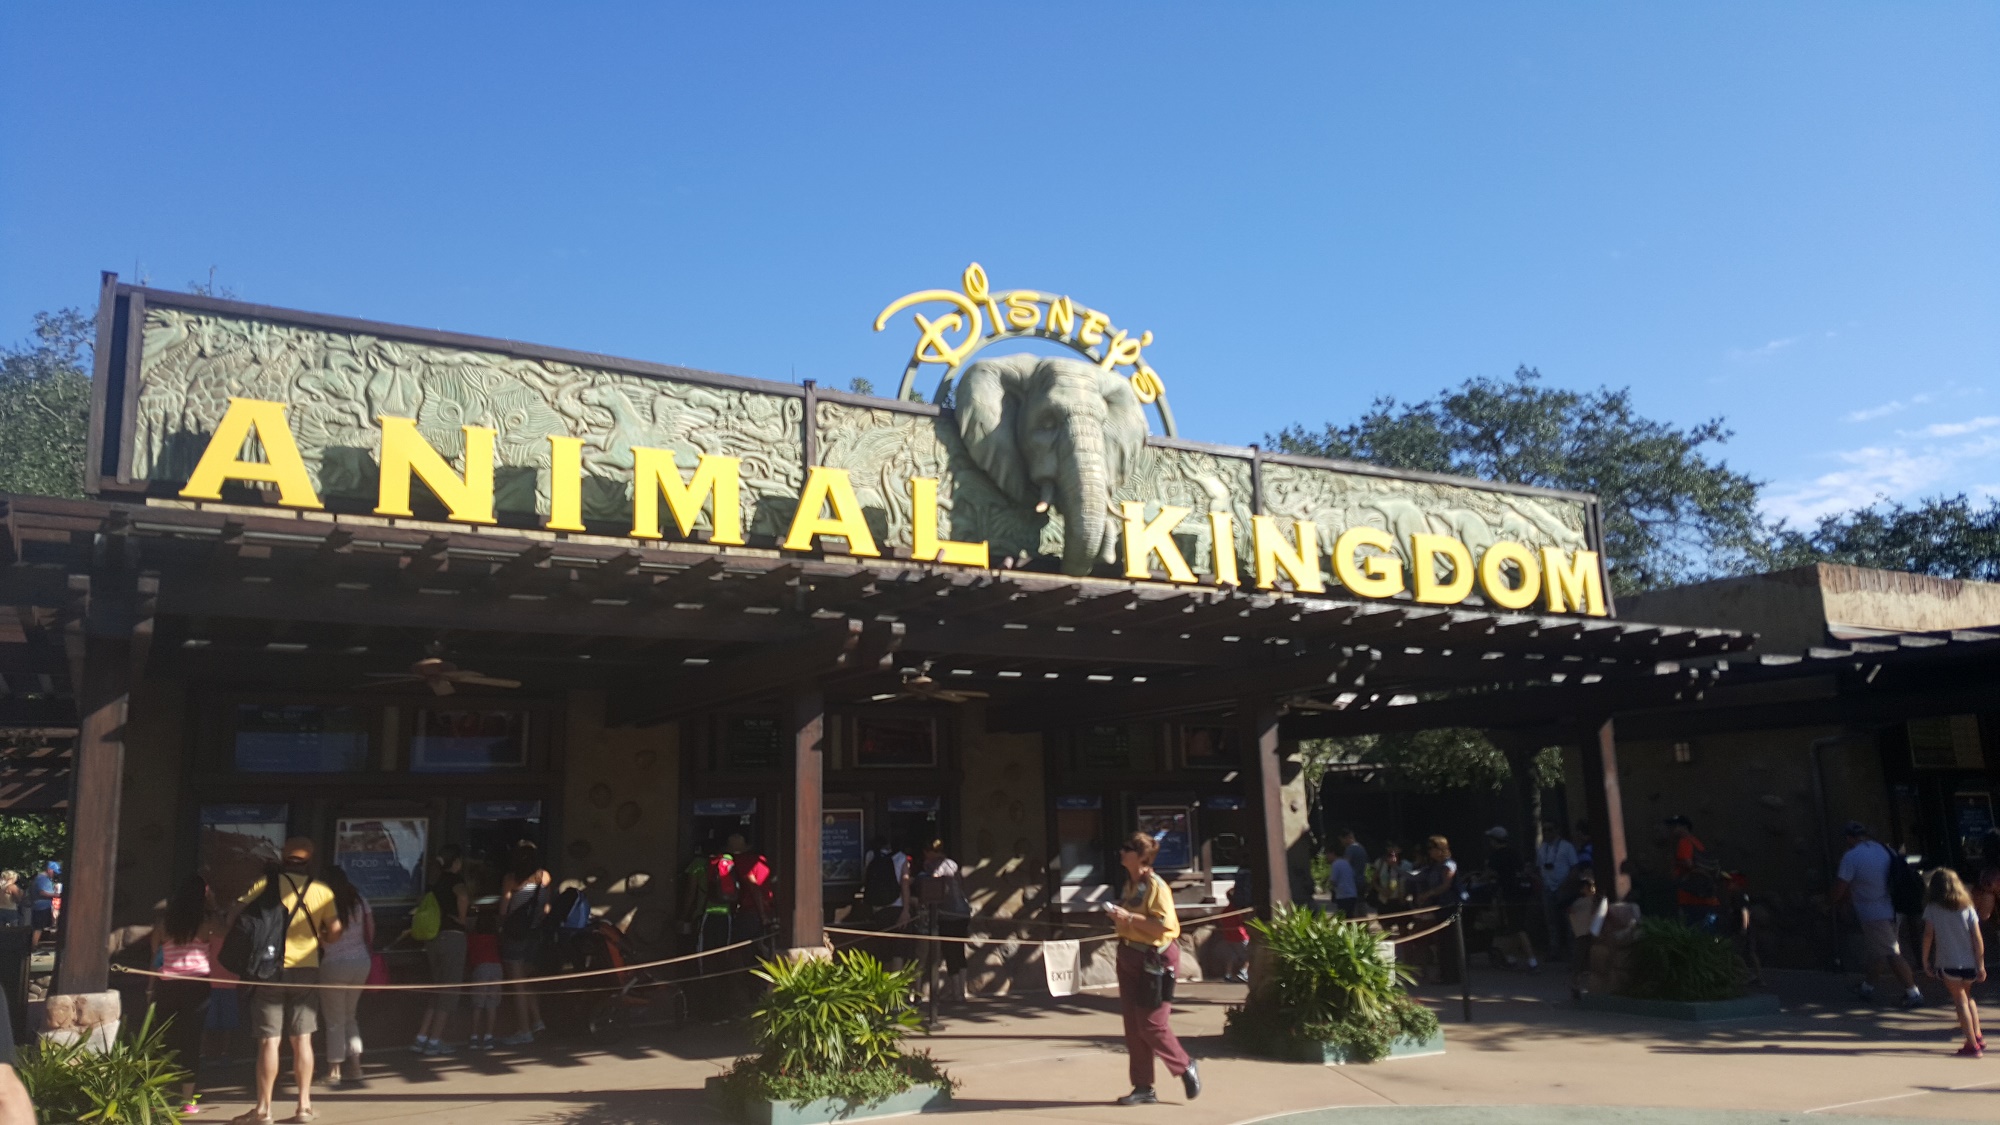 Turkey Leg no longer sold in Disney’s Animal Kingdom